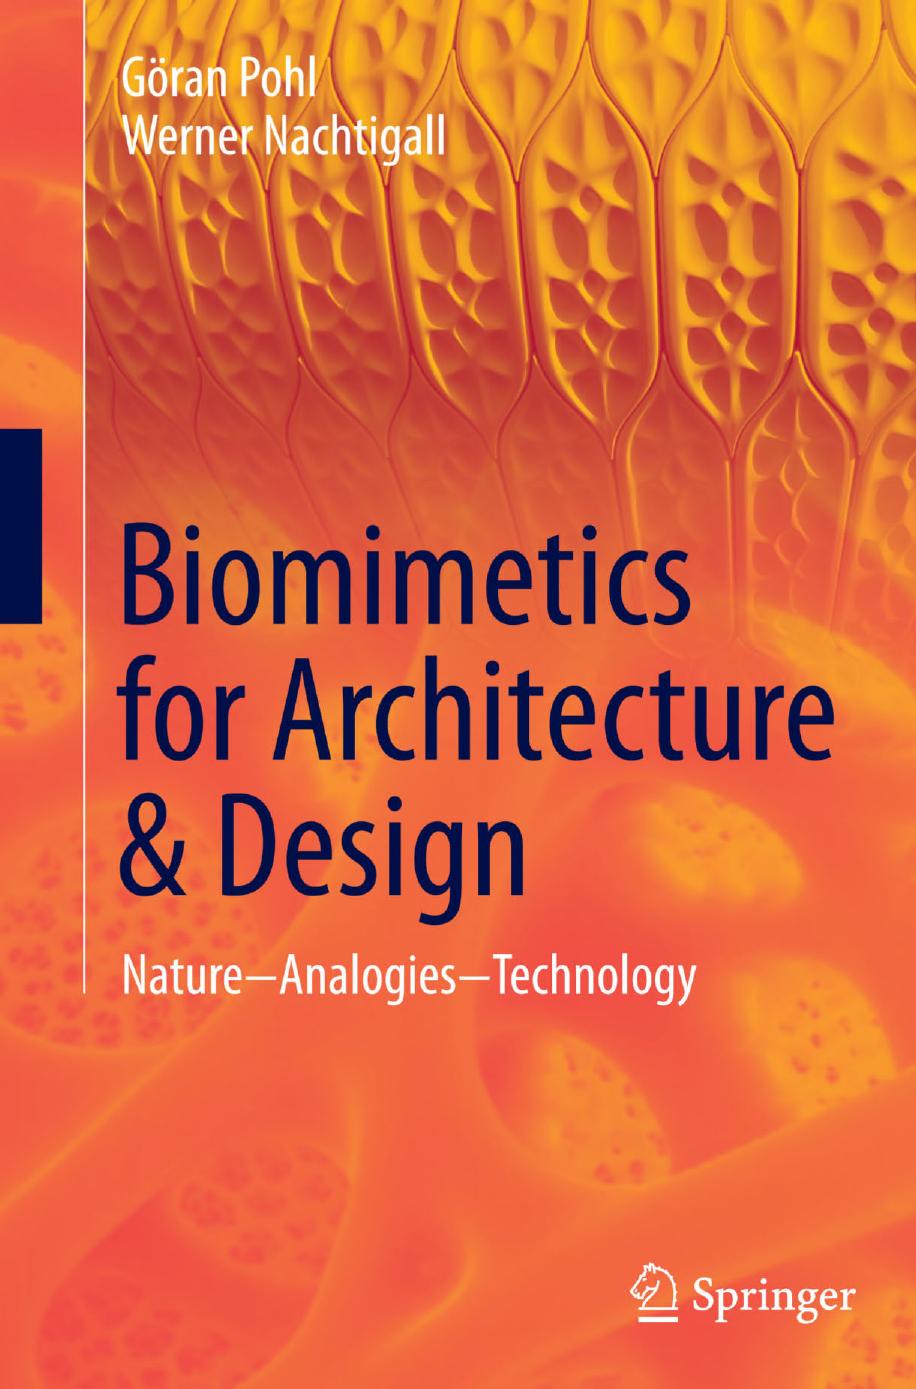 Biomimetics for Architecture & Design  Nature - Analogies